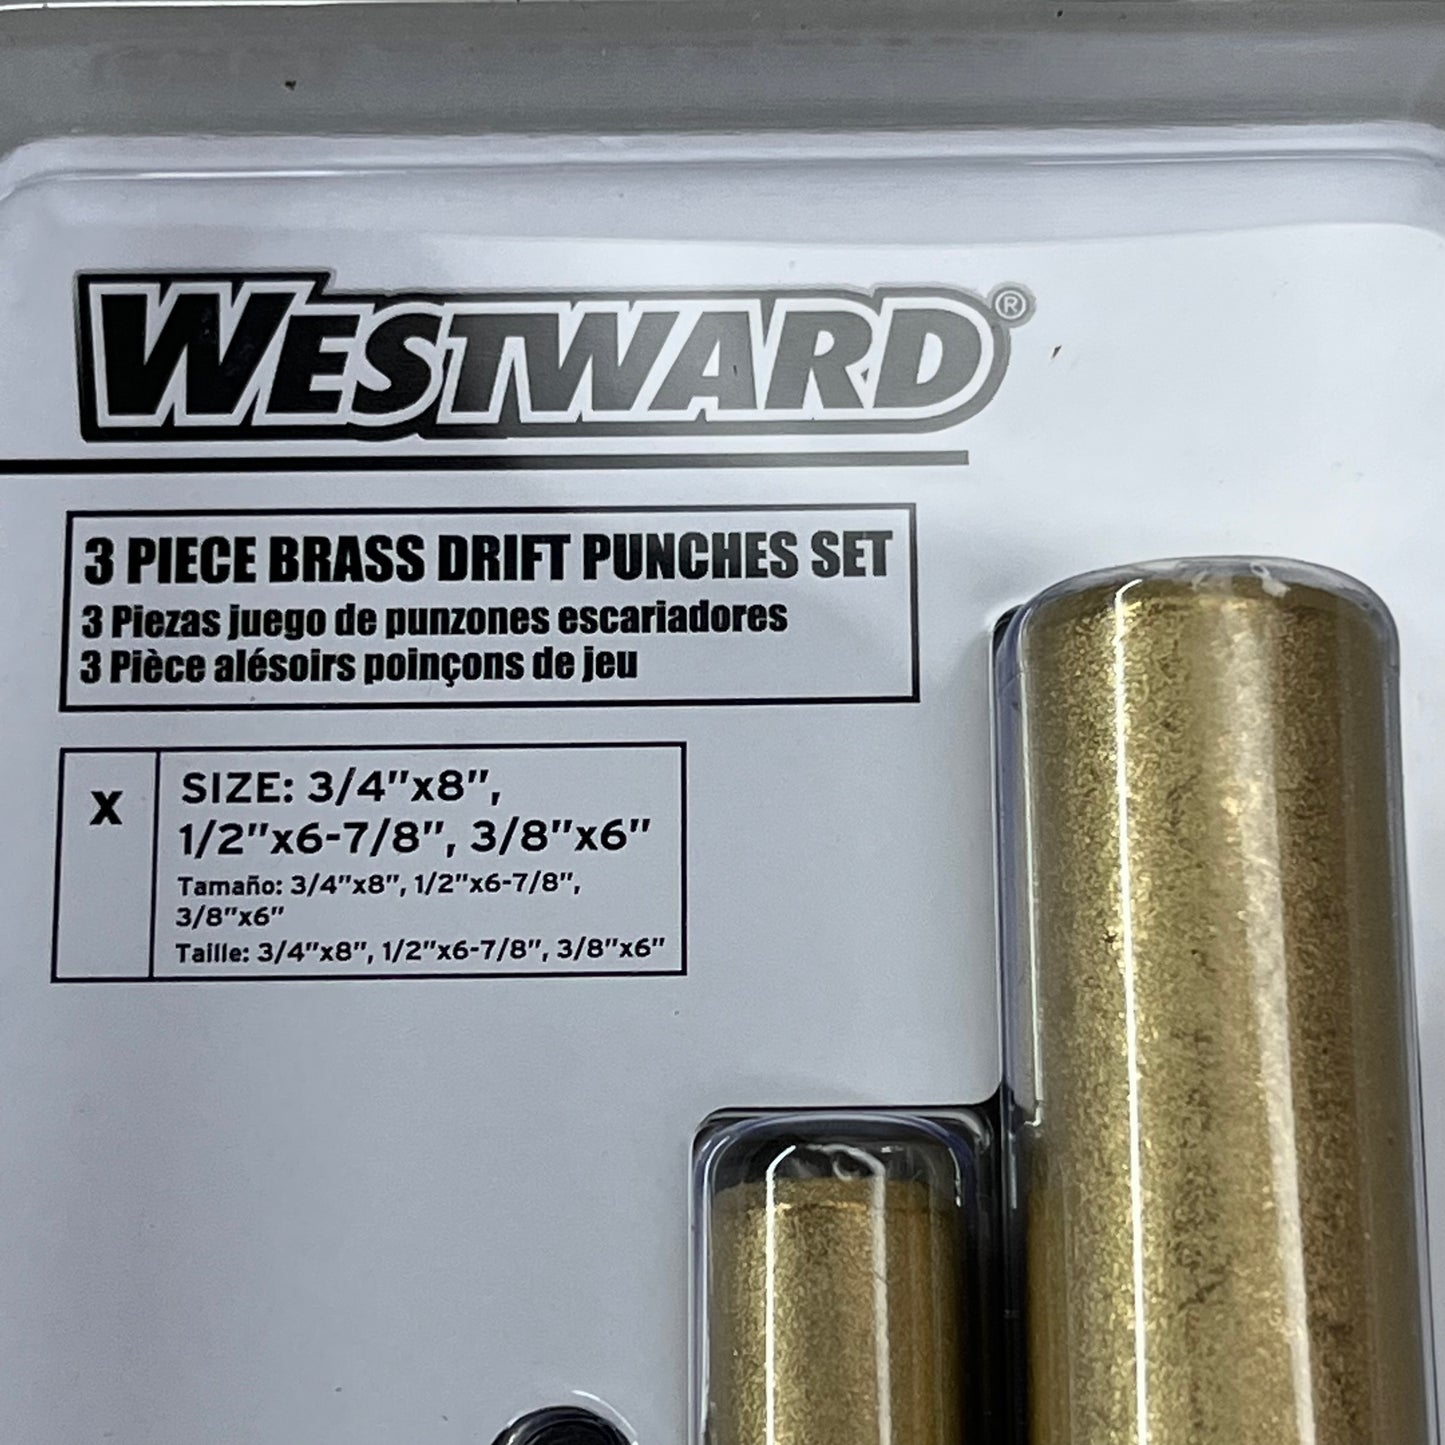 WESTWARD 3-Piece Brass Drift Punches Set 3/4" x 8", 1/2" x 6-7/8", 3/8" x 6" 2AJL3